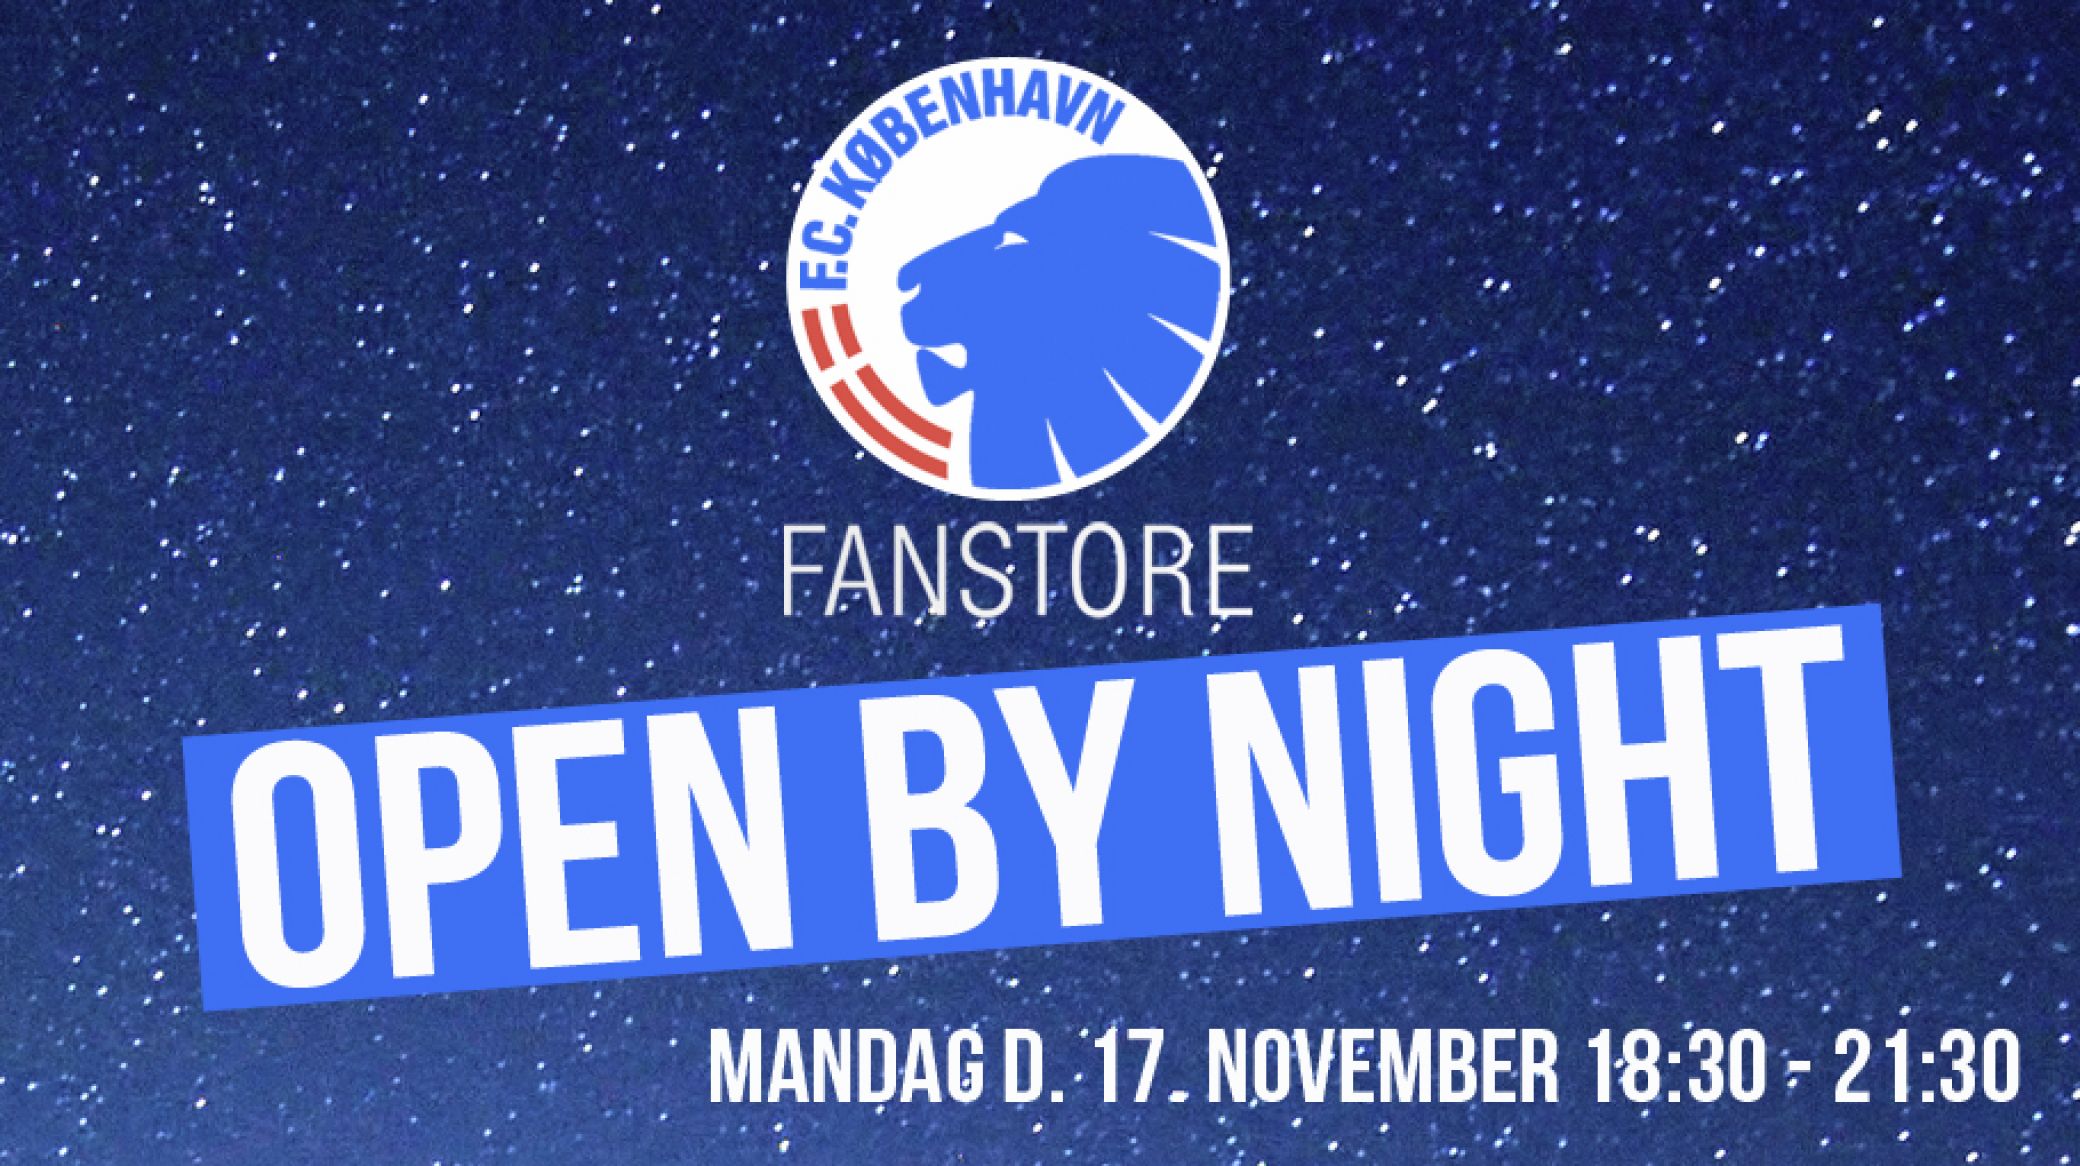 Så er det i aften: Open by Night i FanStore